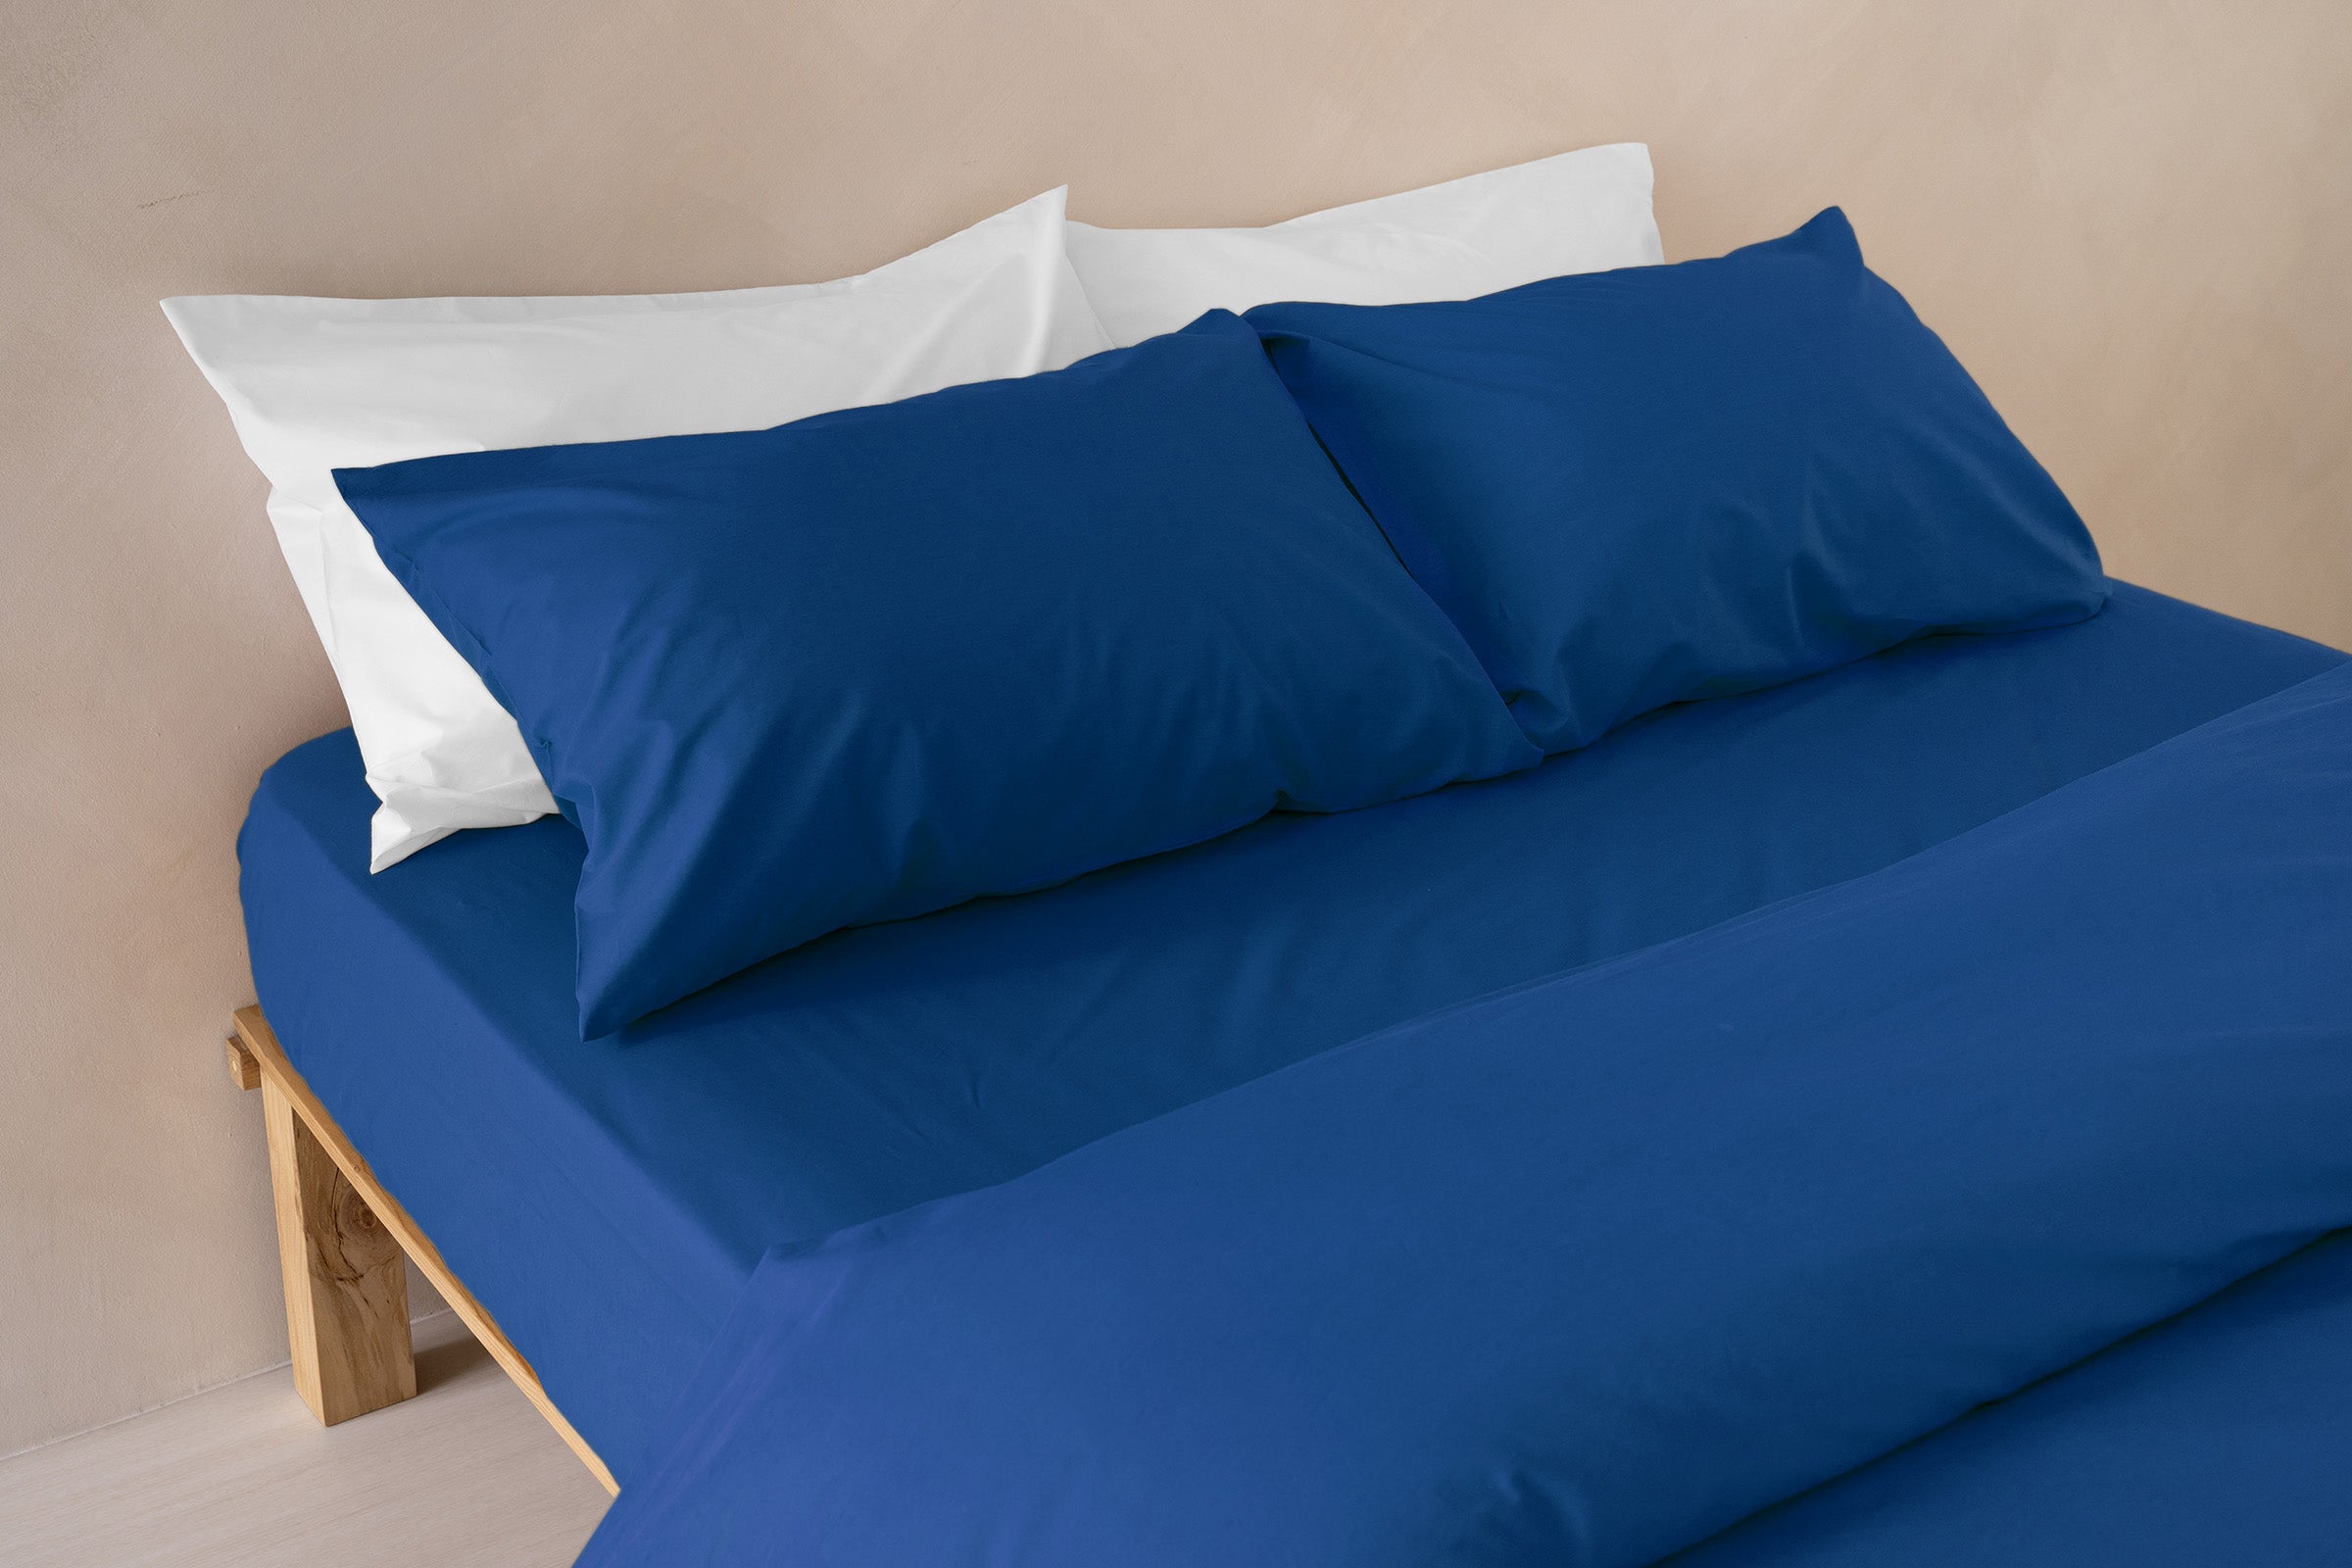 crisp-cobalt-duvet-cover-fitted-sheet-pillowcase-pair-white-pillowcase-pair-side-view-by-sojao.jpg